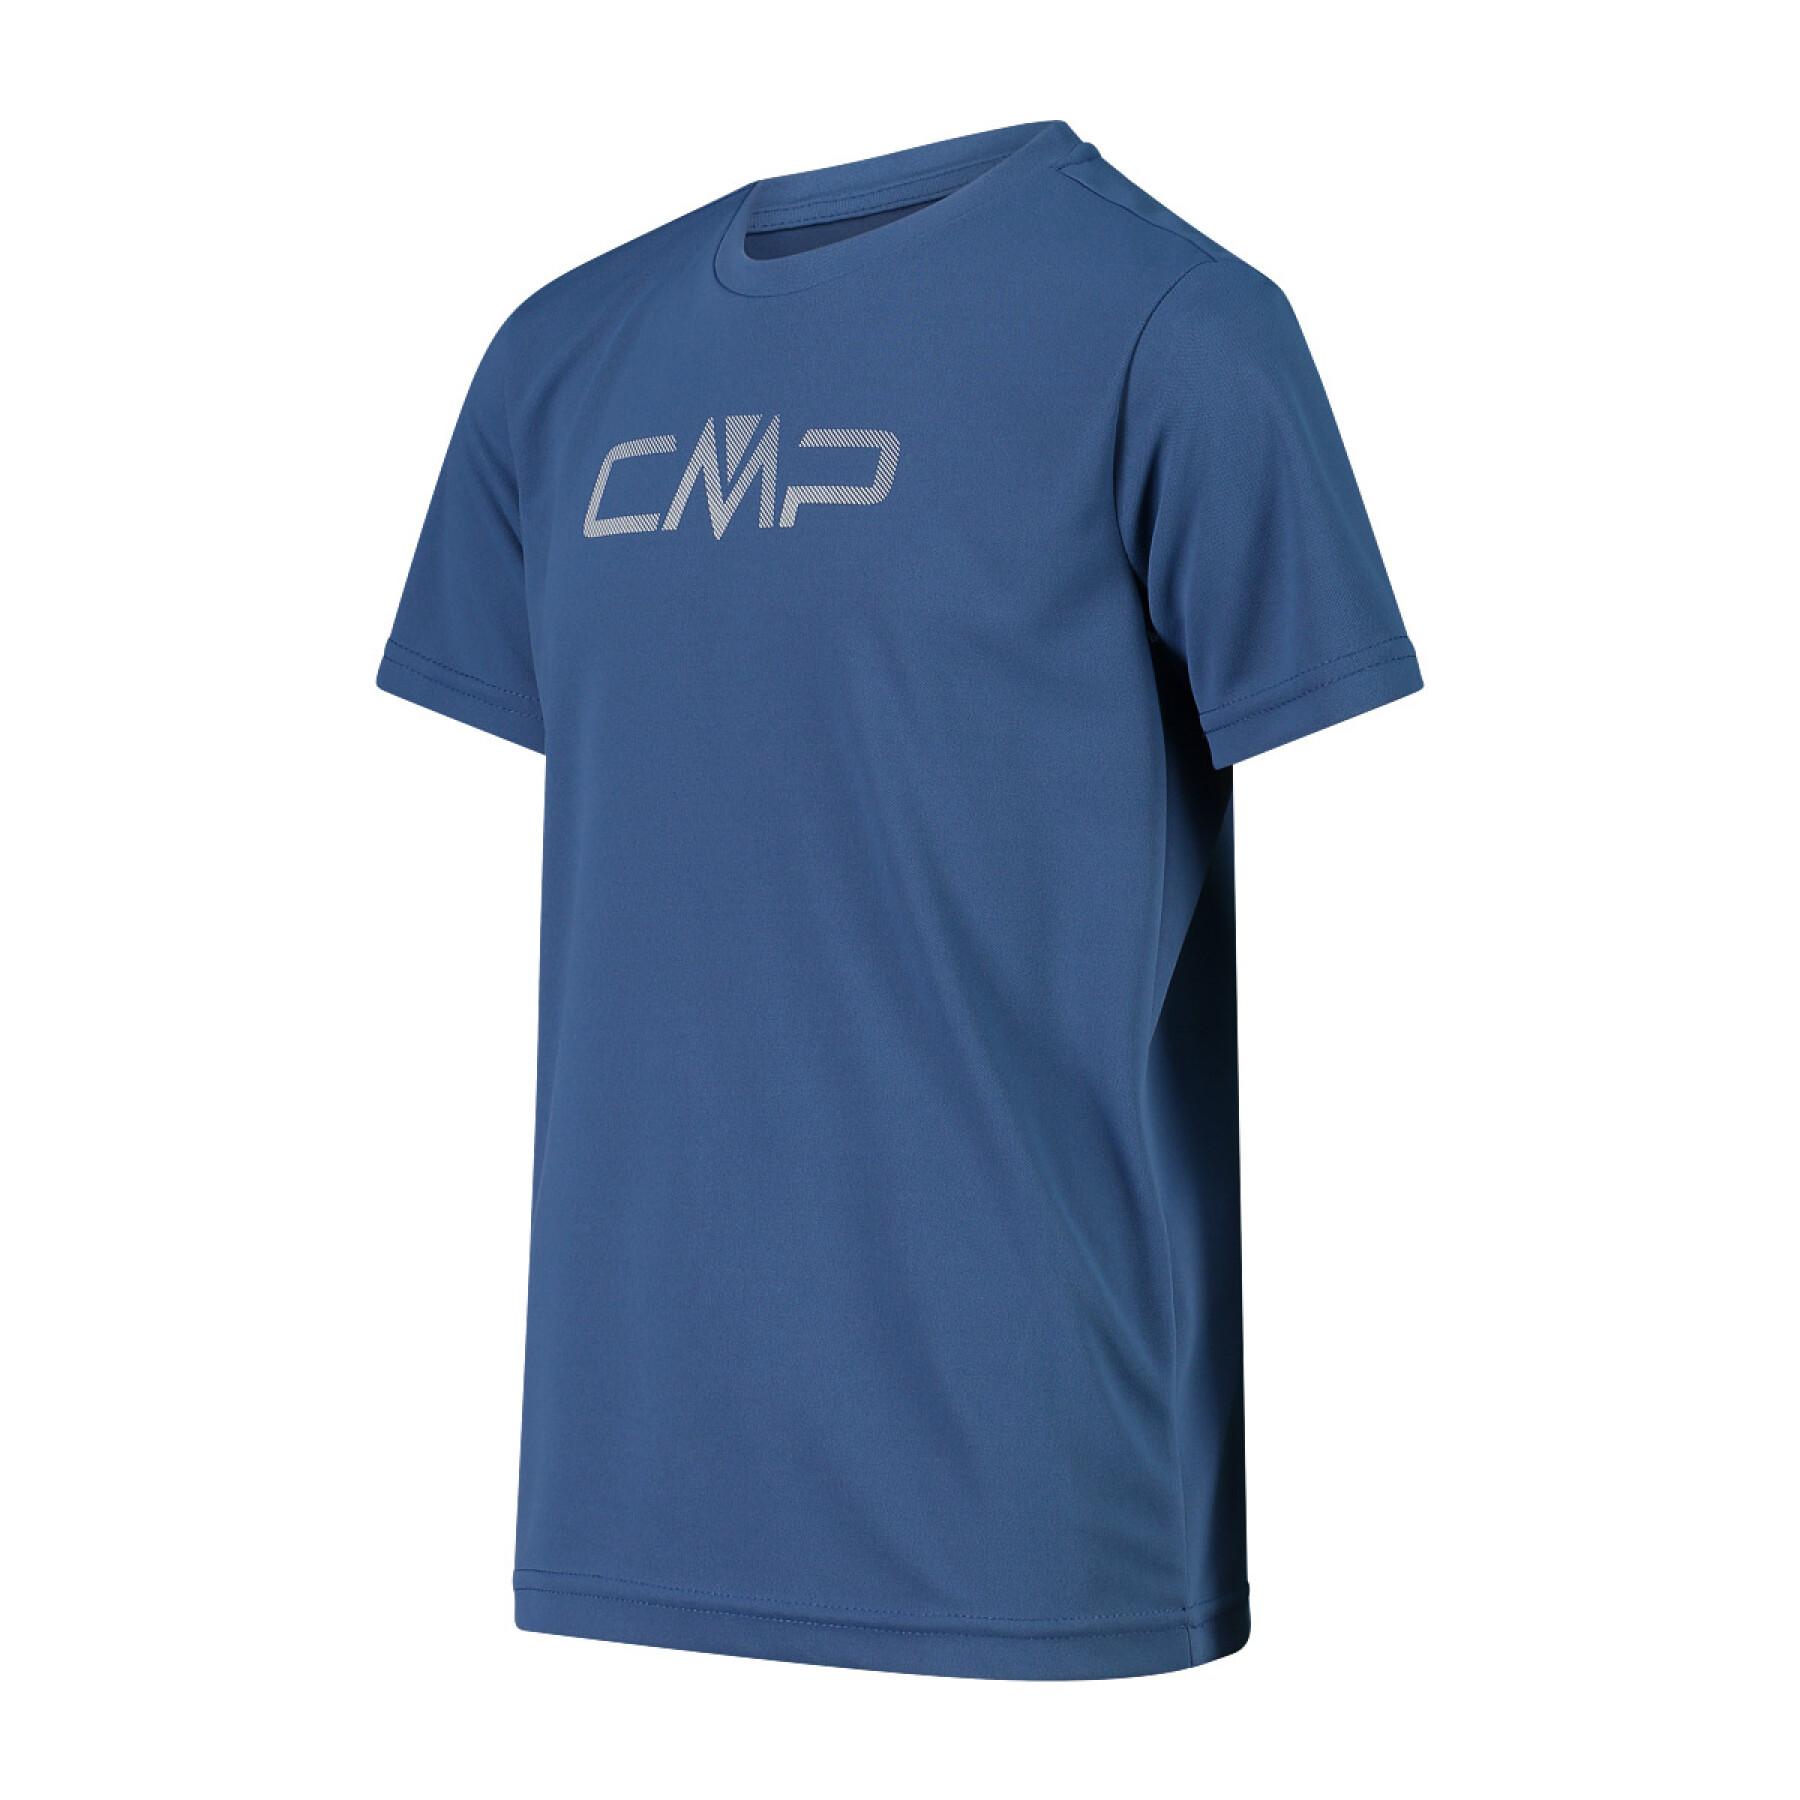 T-shirt maxi logo enfant CMP